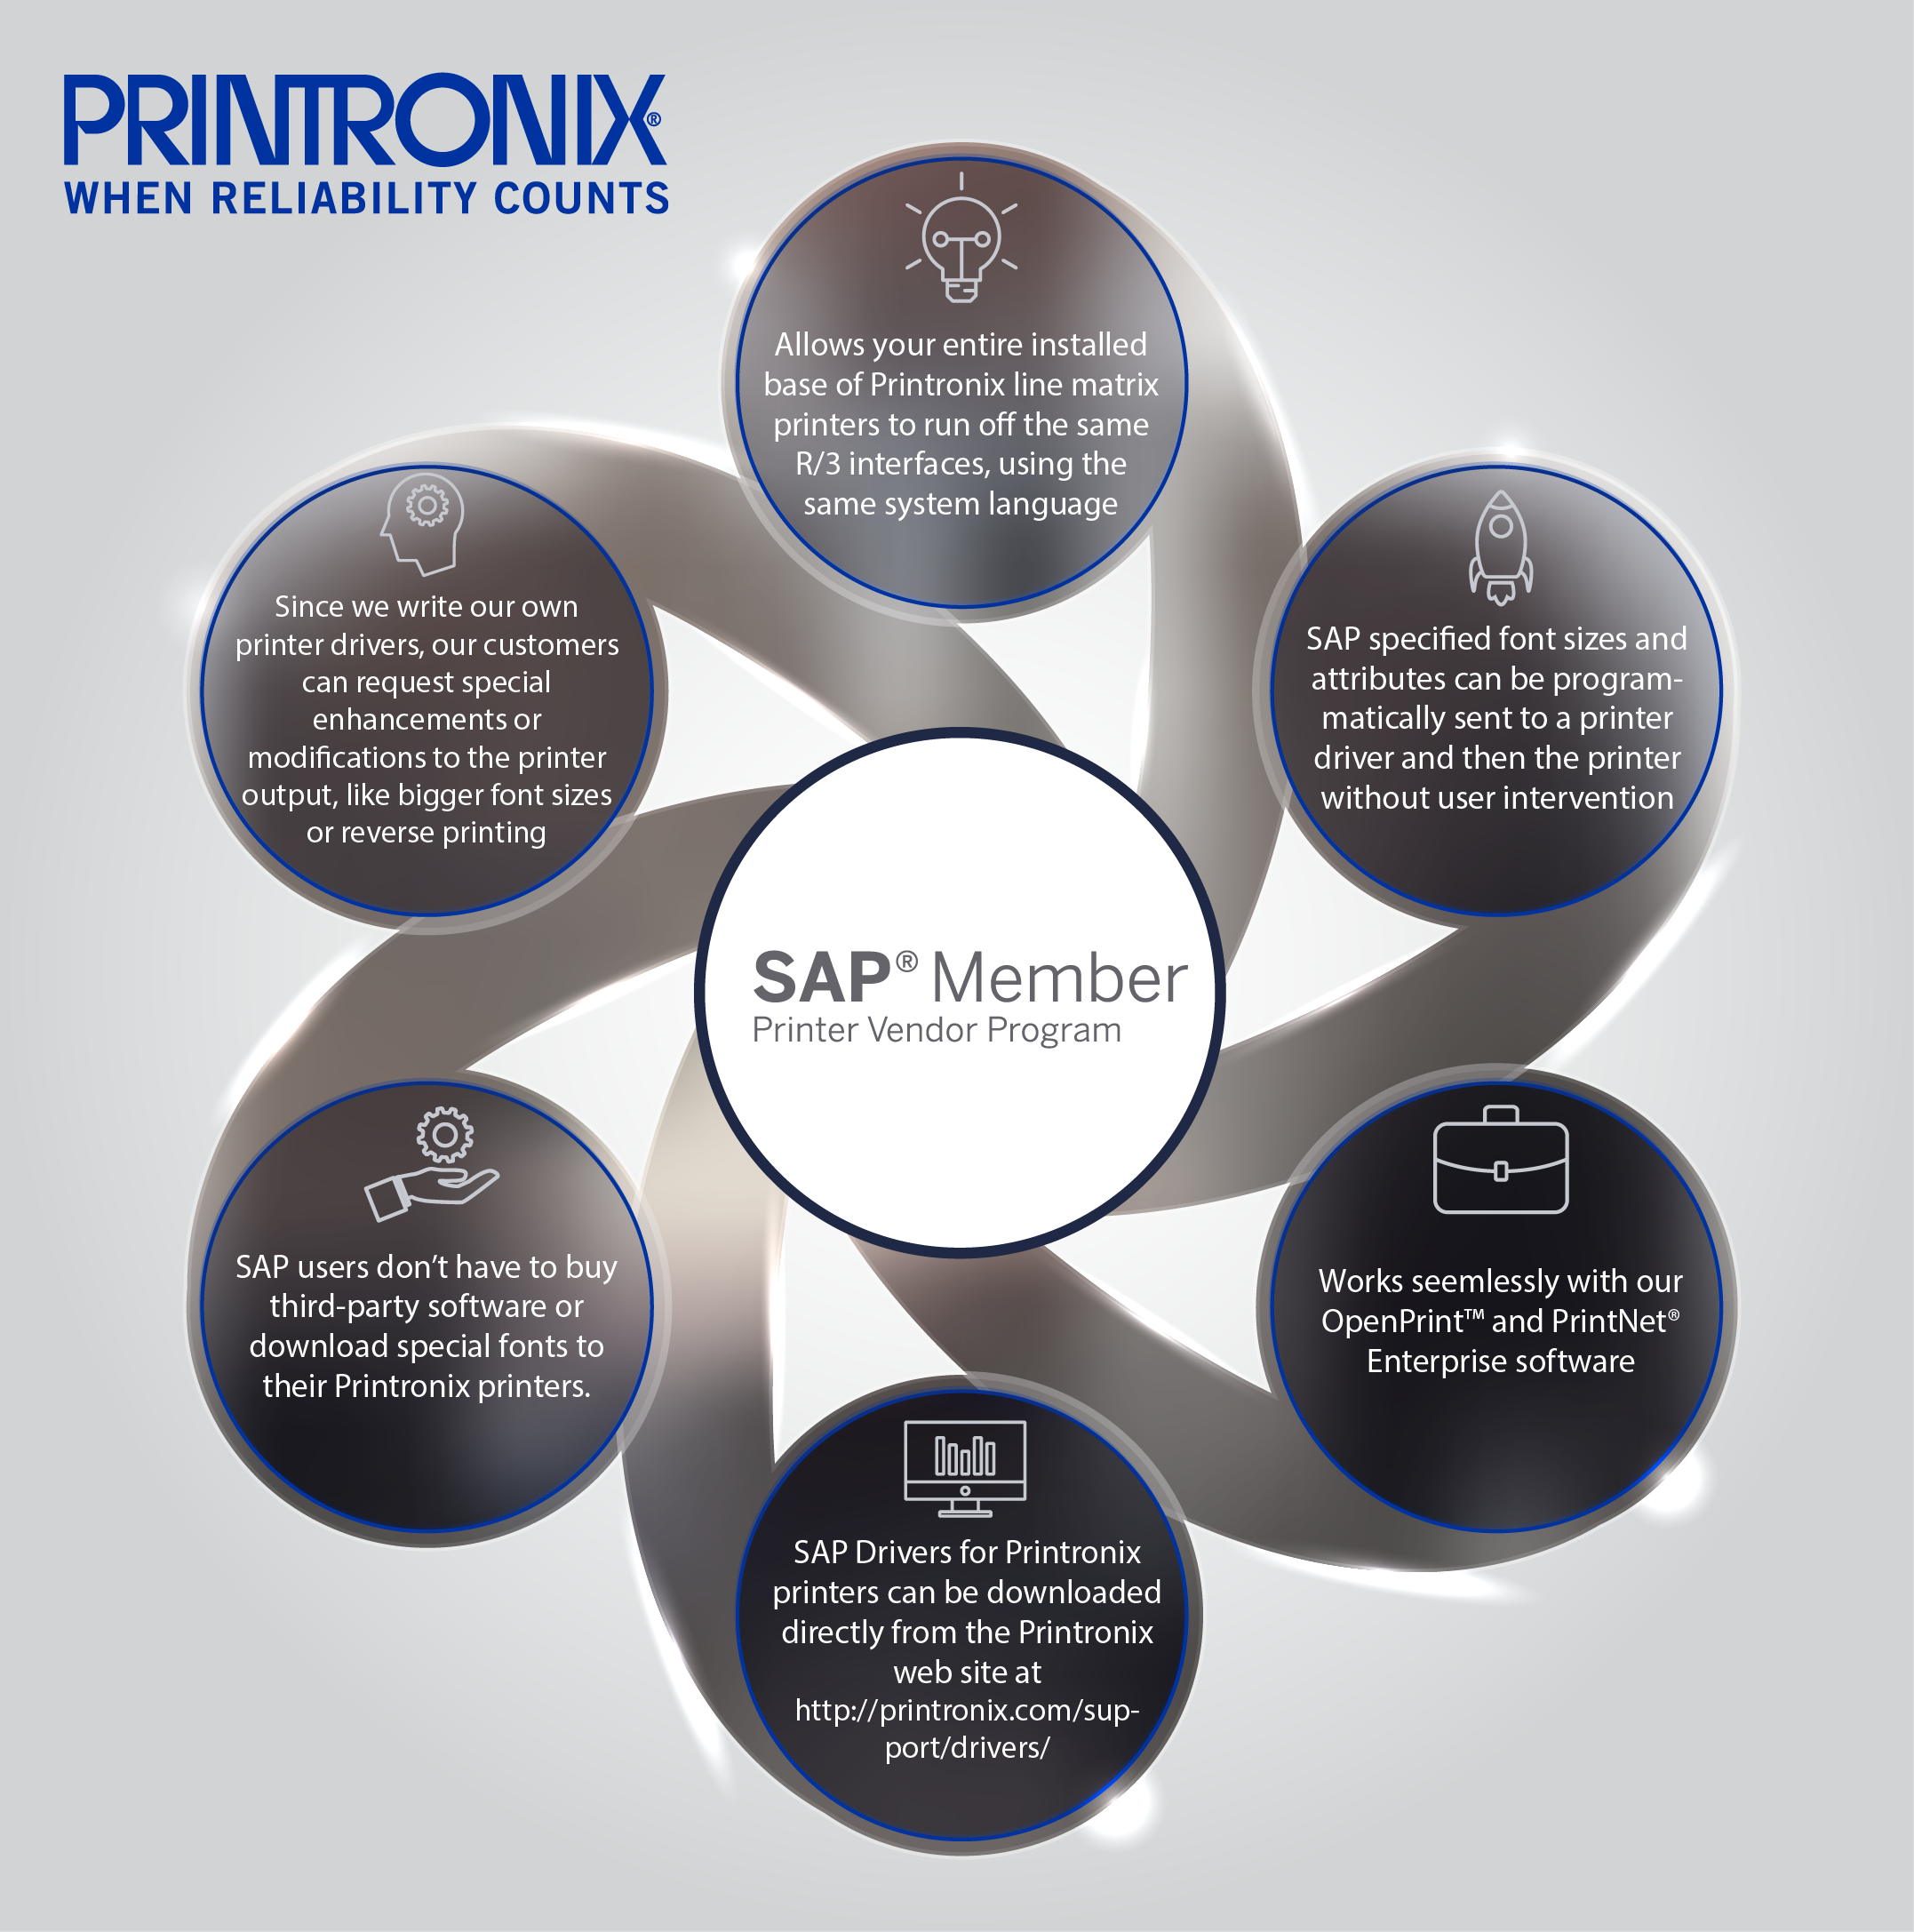 Featured image for “SAP Printer Vendor Program Member”